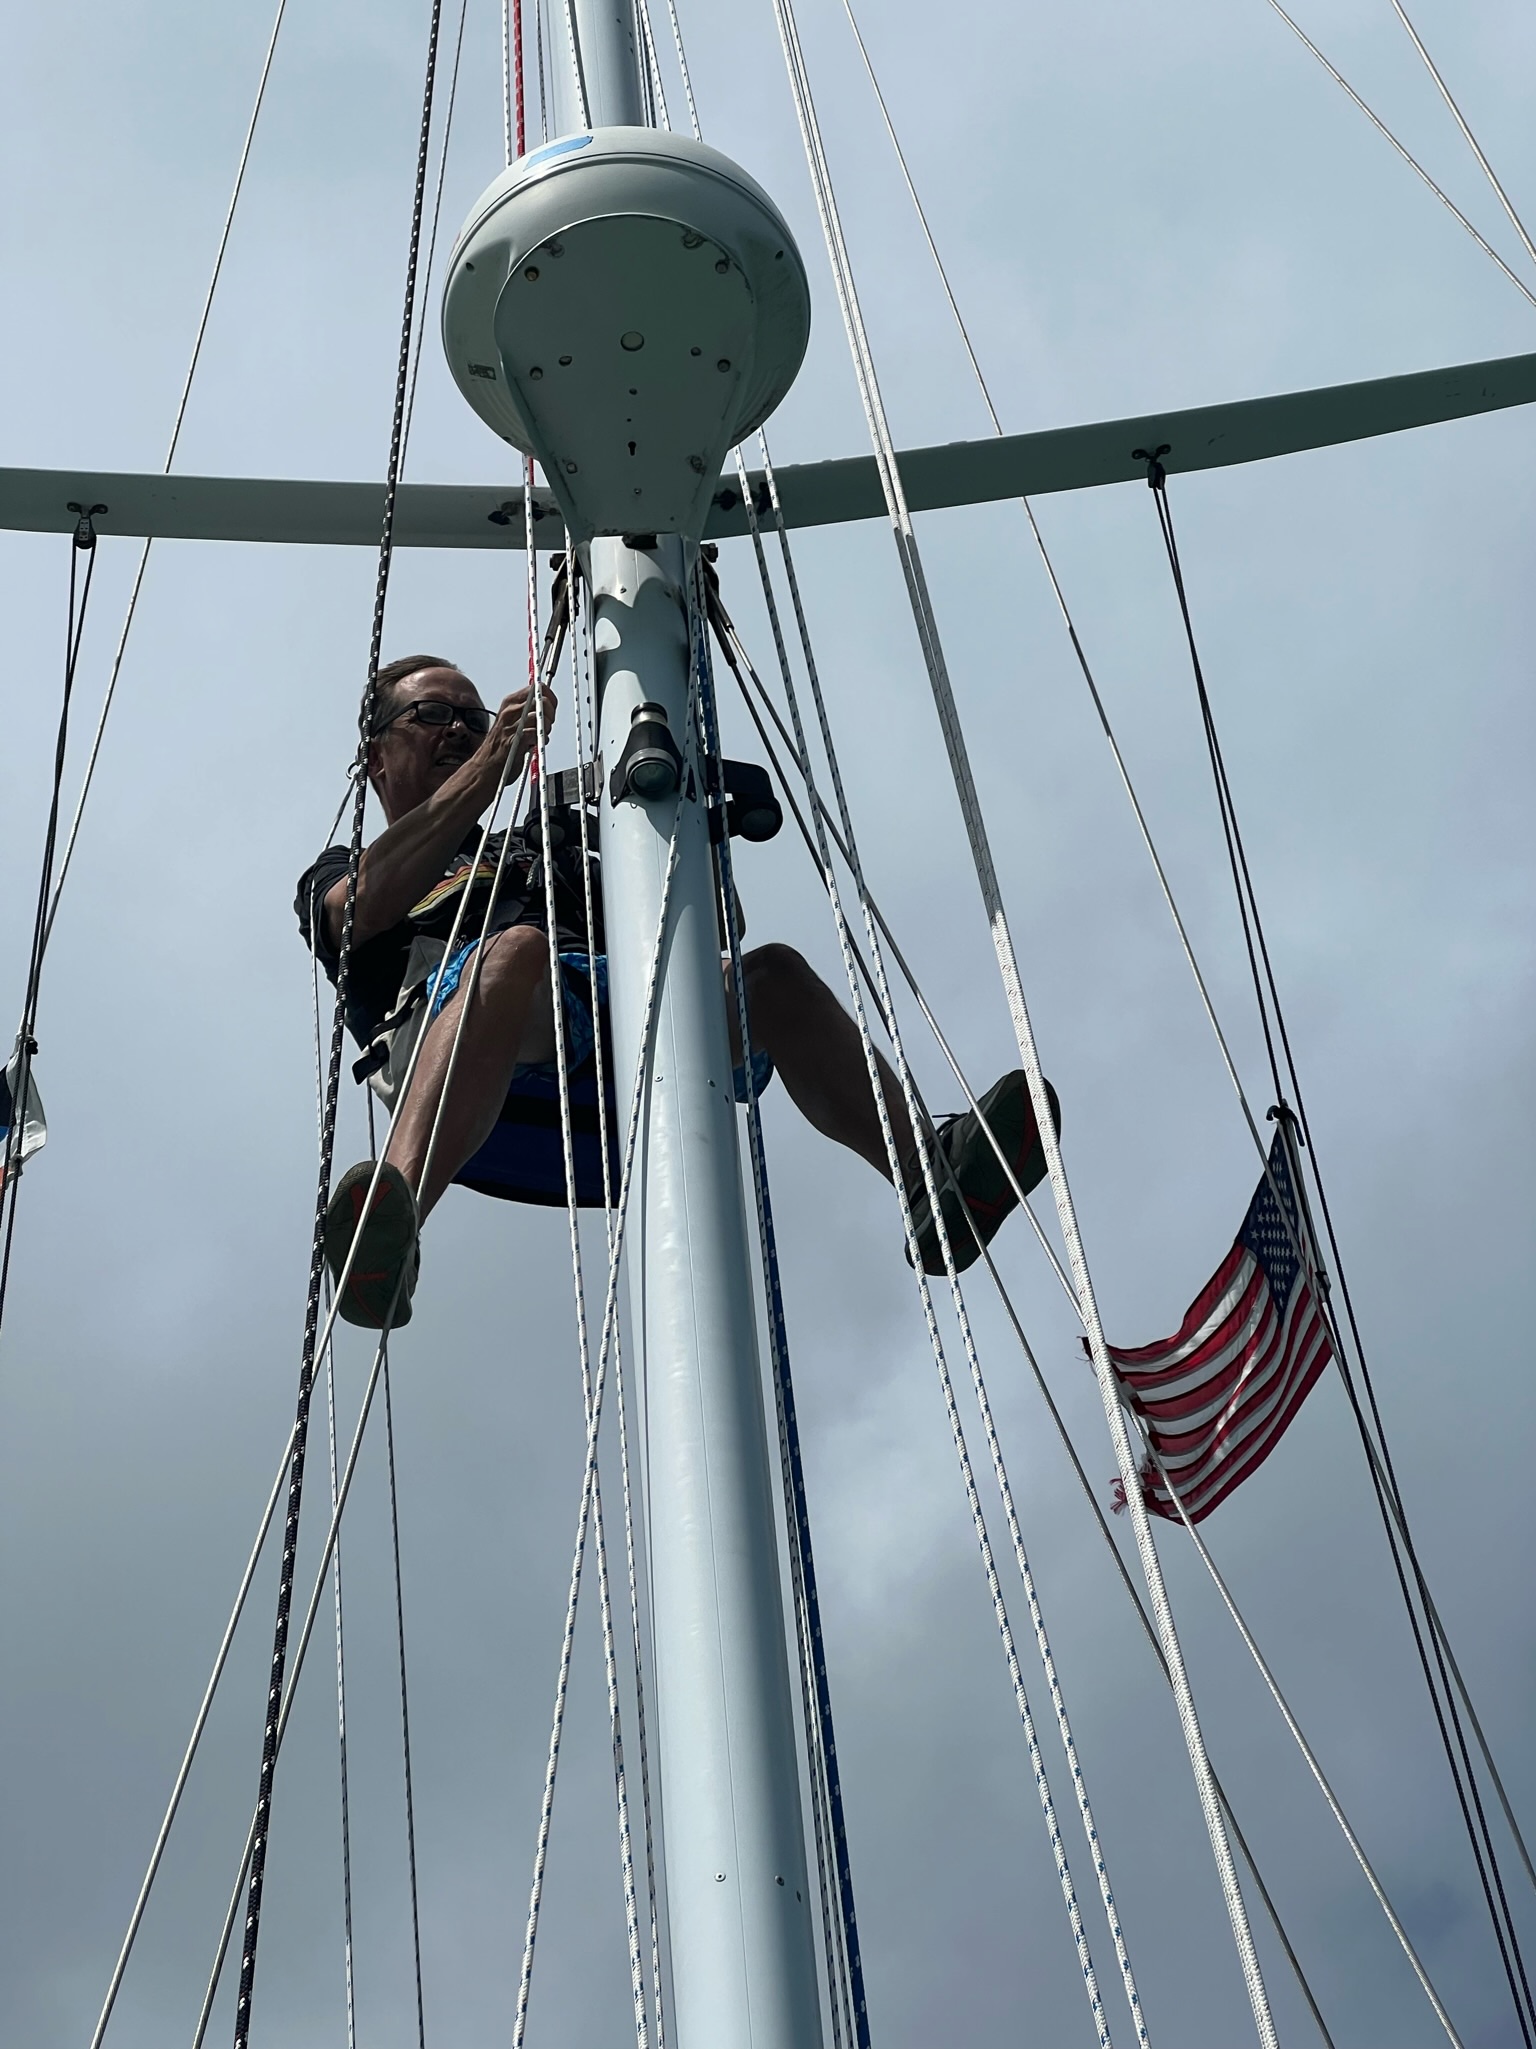 Up the Mast